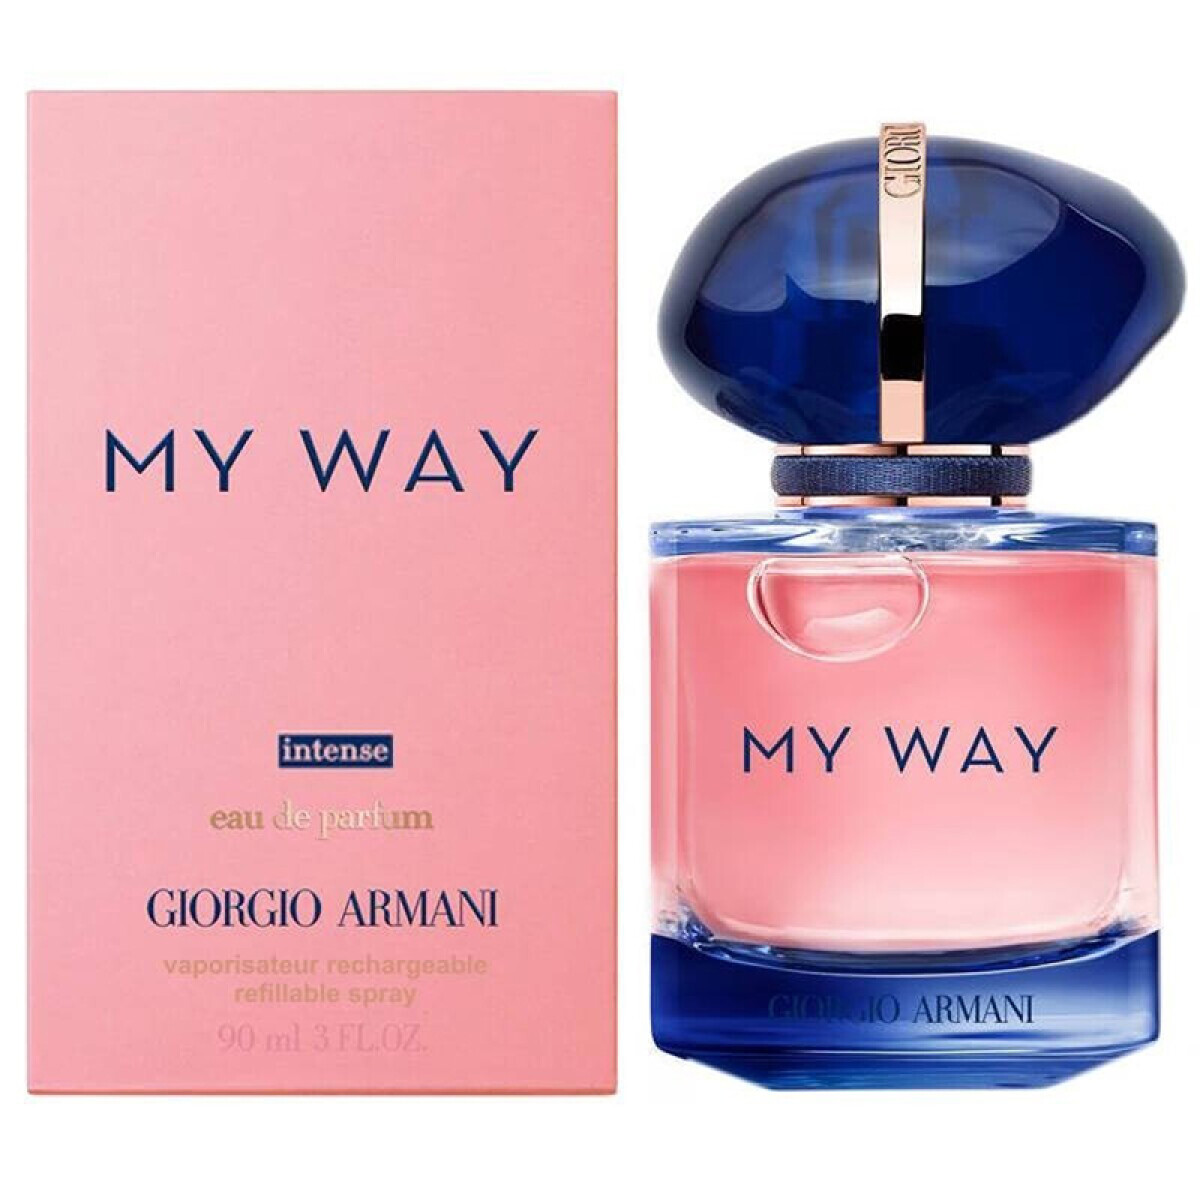 My Way Intense eau de parfum Giorgio Armani - 90 ml 